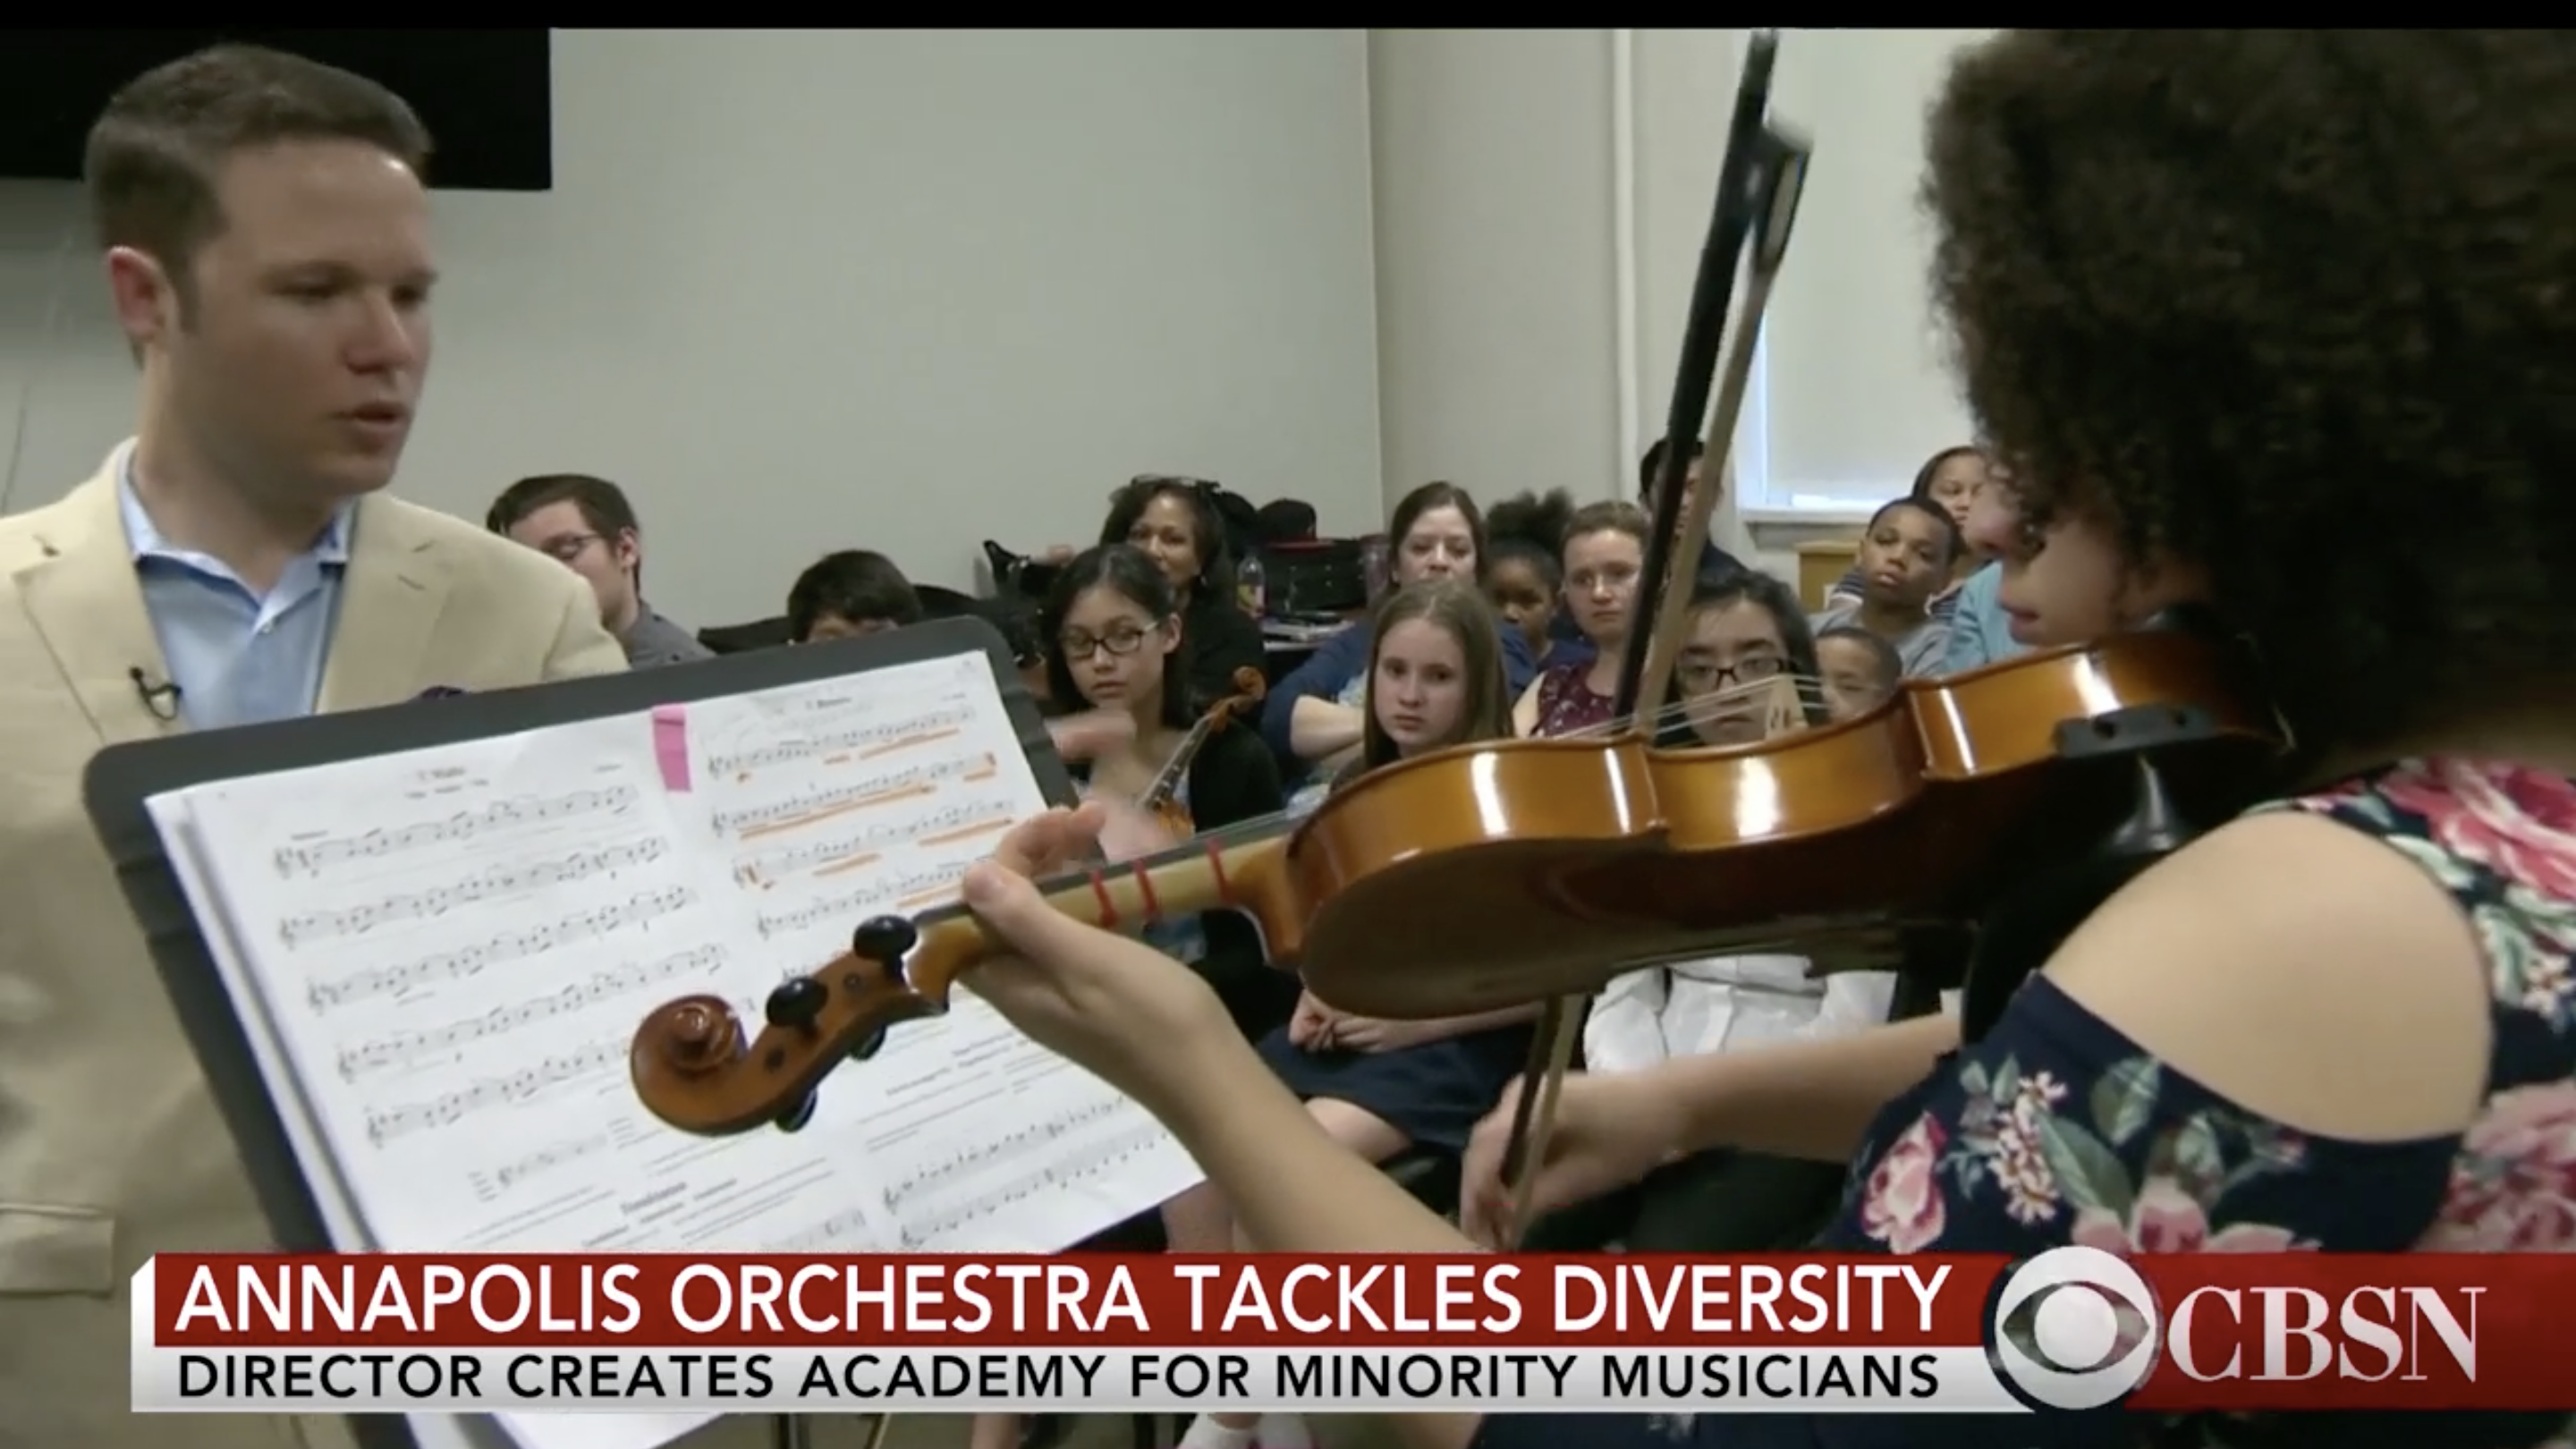 Annapolis orchestra diversity